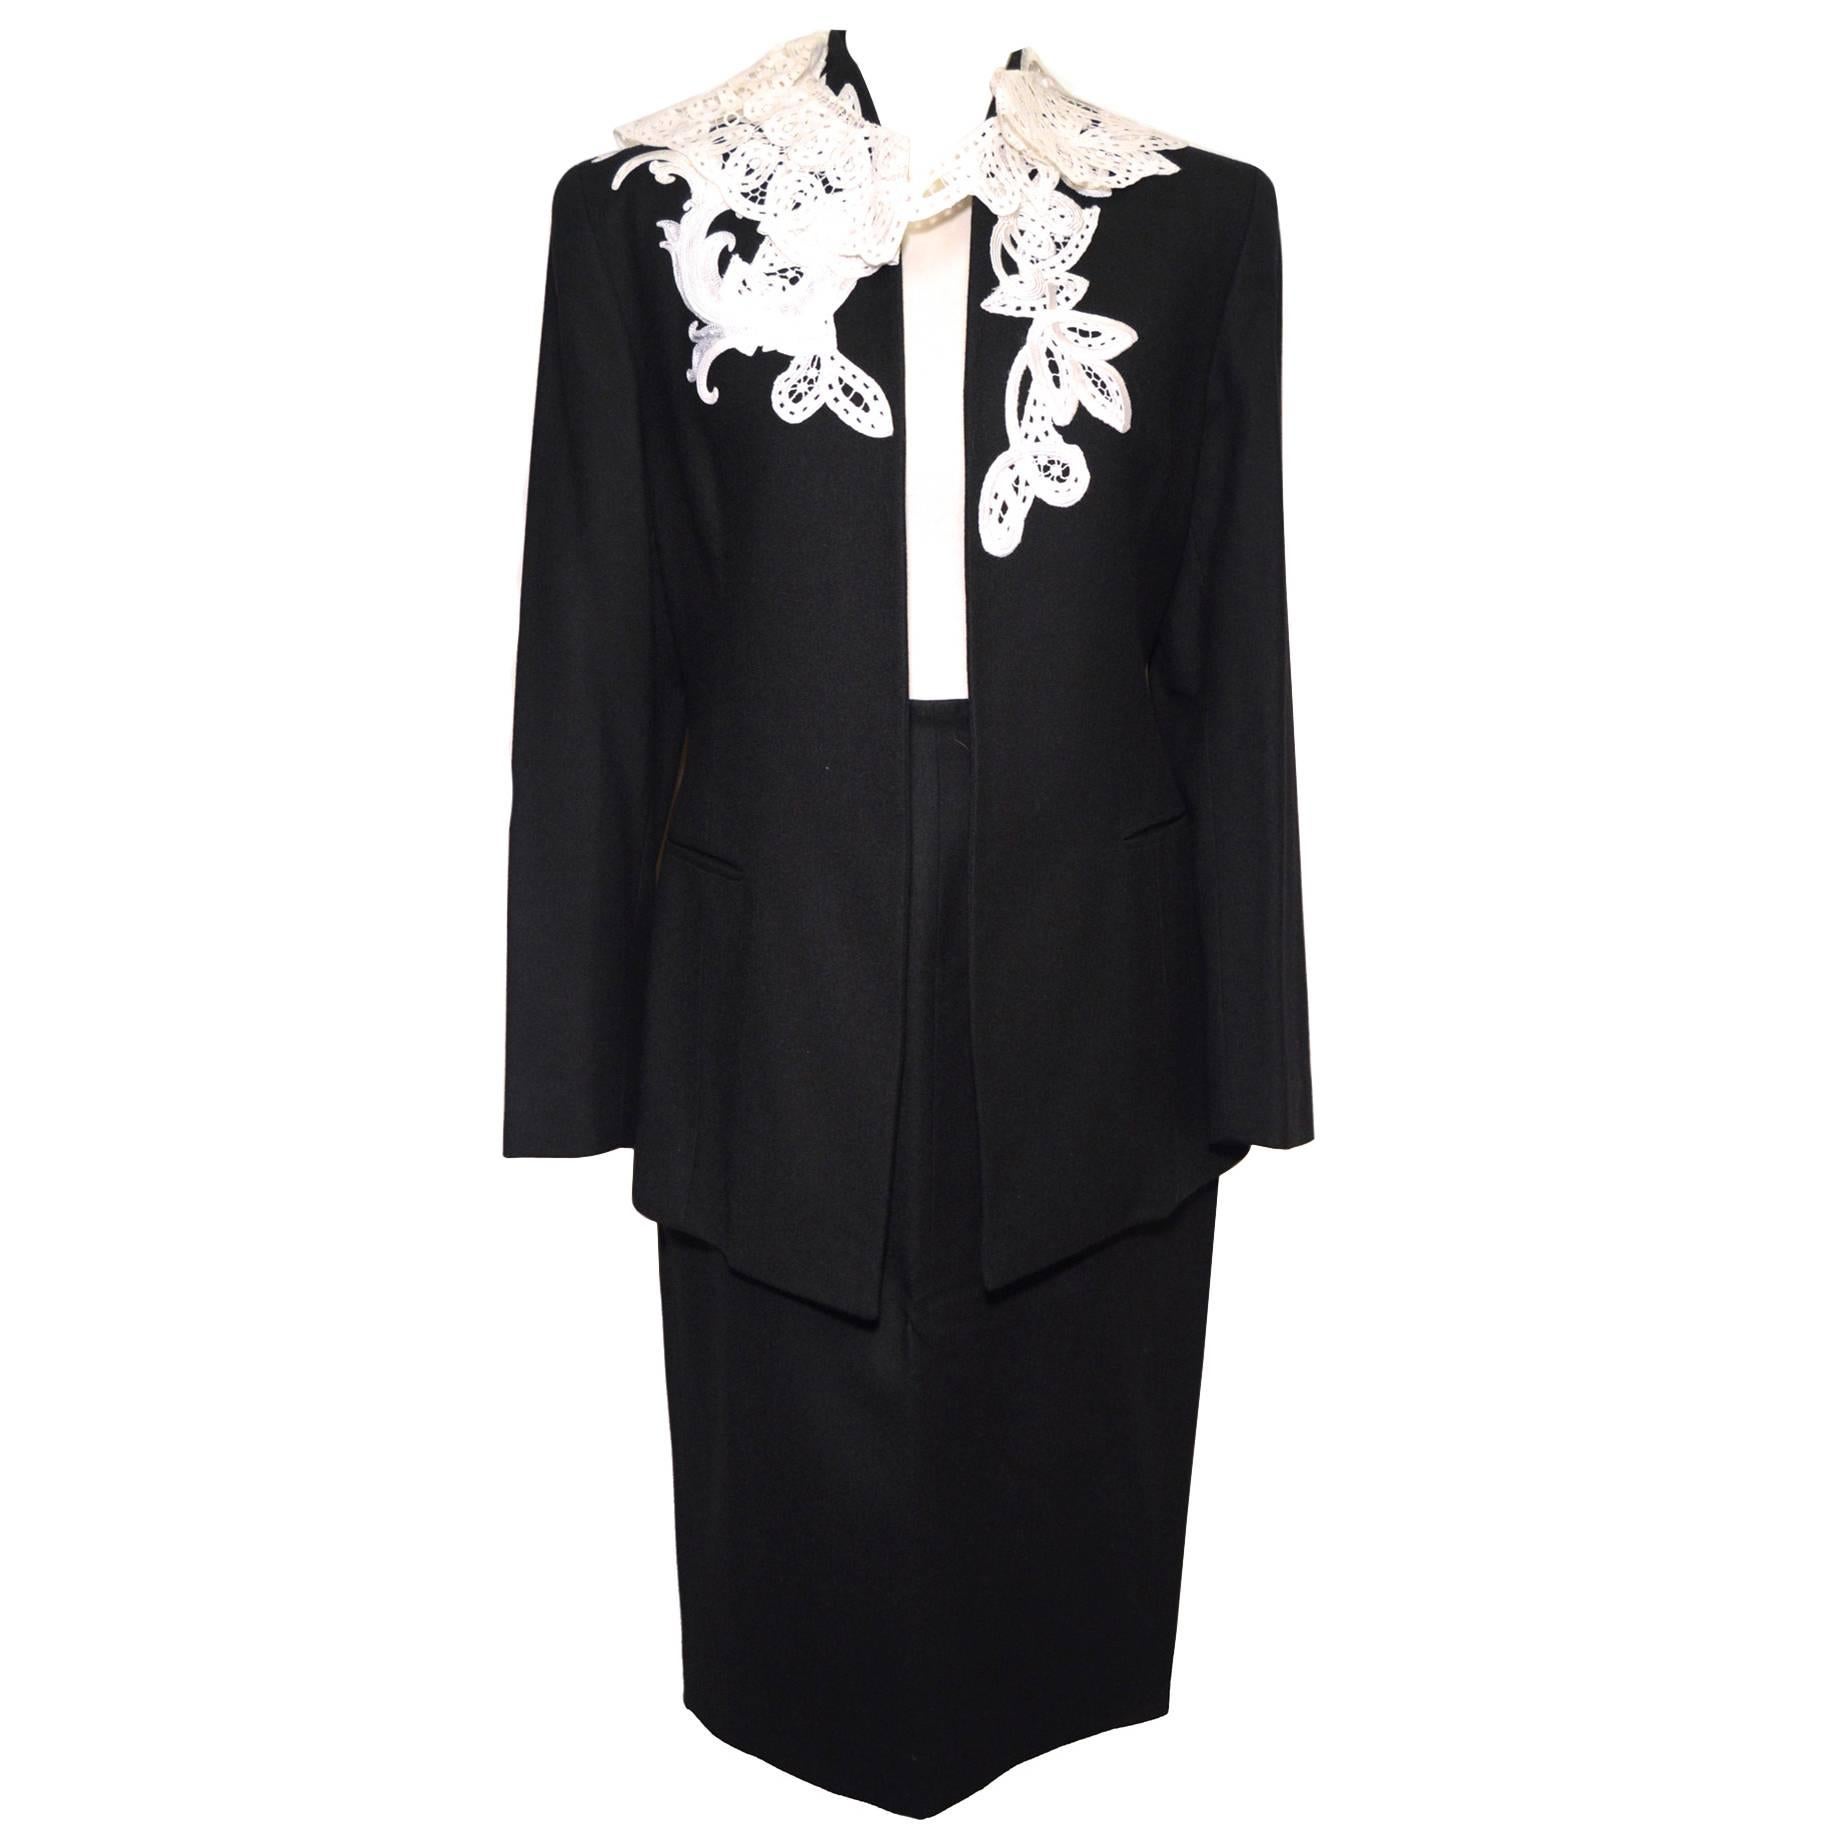 Gianfranco Ferre for Nan Dunskin Vintage 1980s Black Wool Dress Suit with Lace T